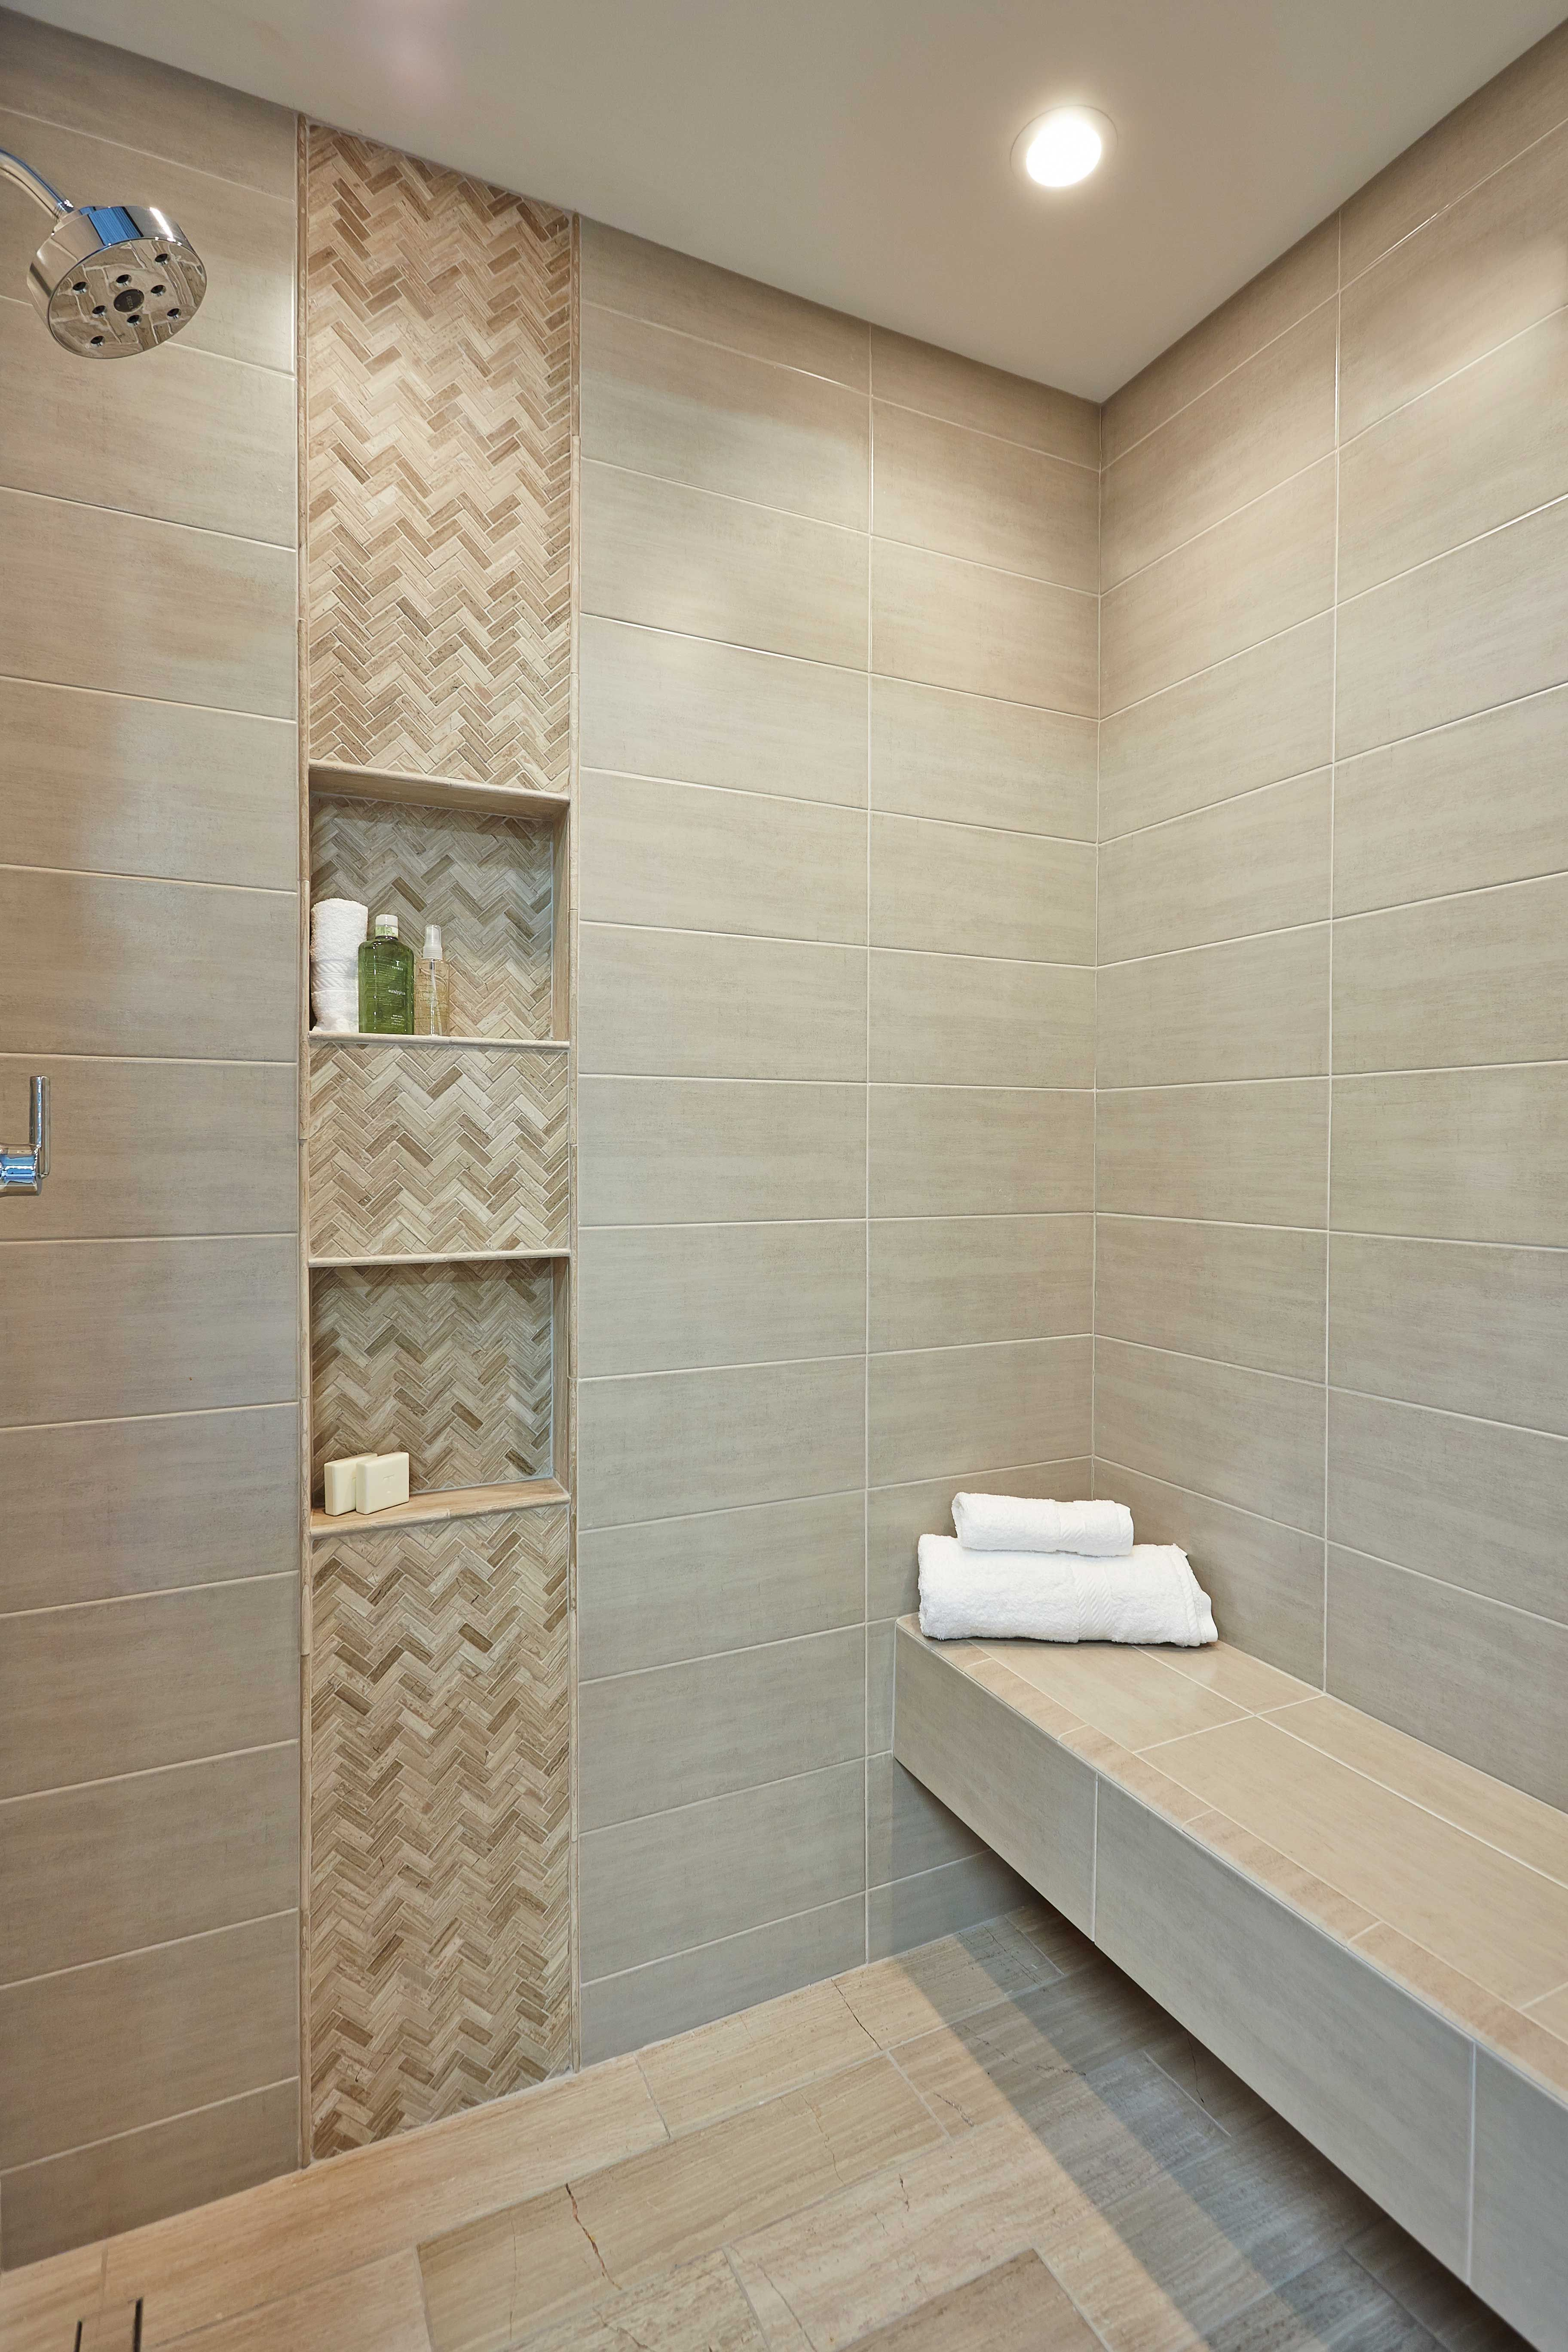 Bathroom Shower Accent Wall Tile Legno Small Herringbone 12 X 12 regarding size 3648 X 5472